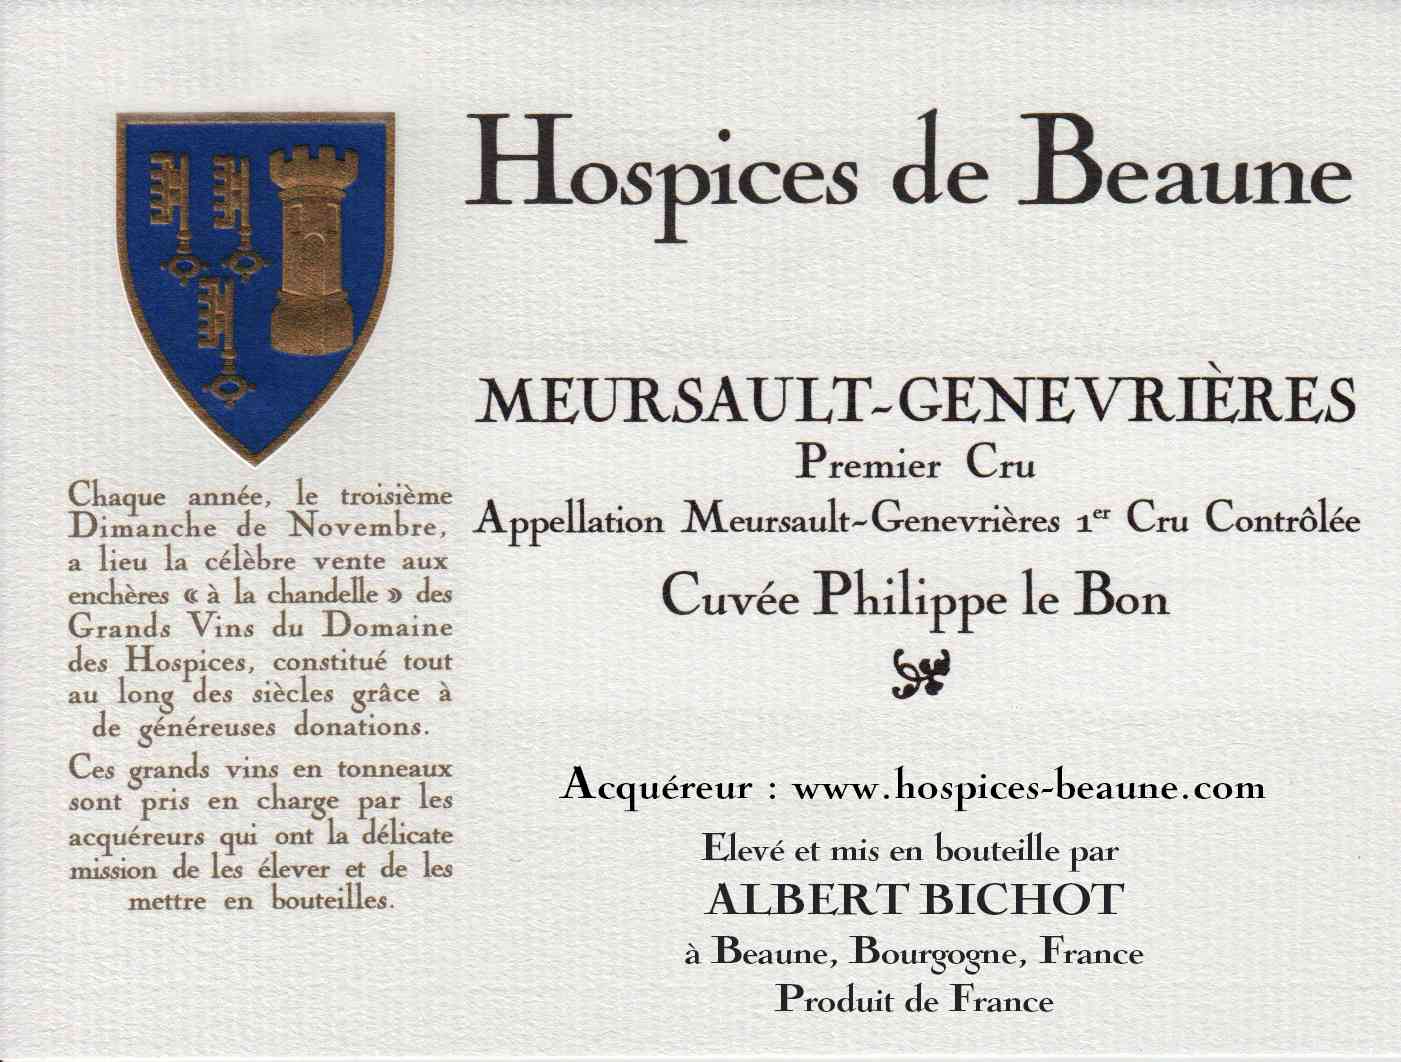 Encheres-auction-HospicesdeBeaune-AlbertBichot-Meursault-Genevrieres-PremierCru-Cuvee-PhilippeLeBon